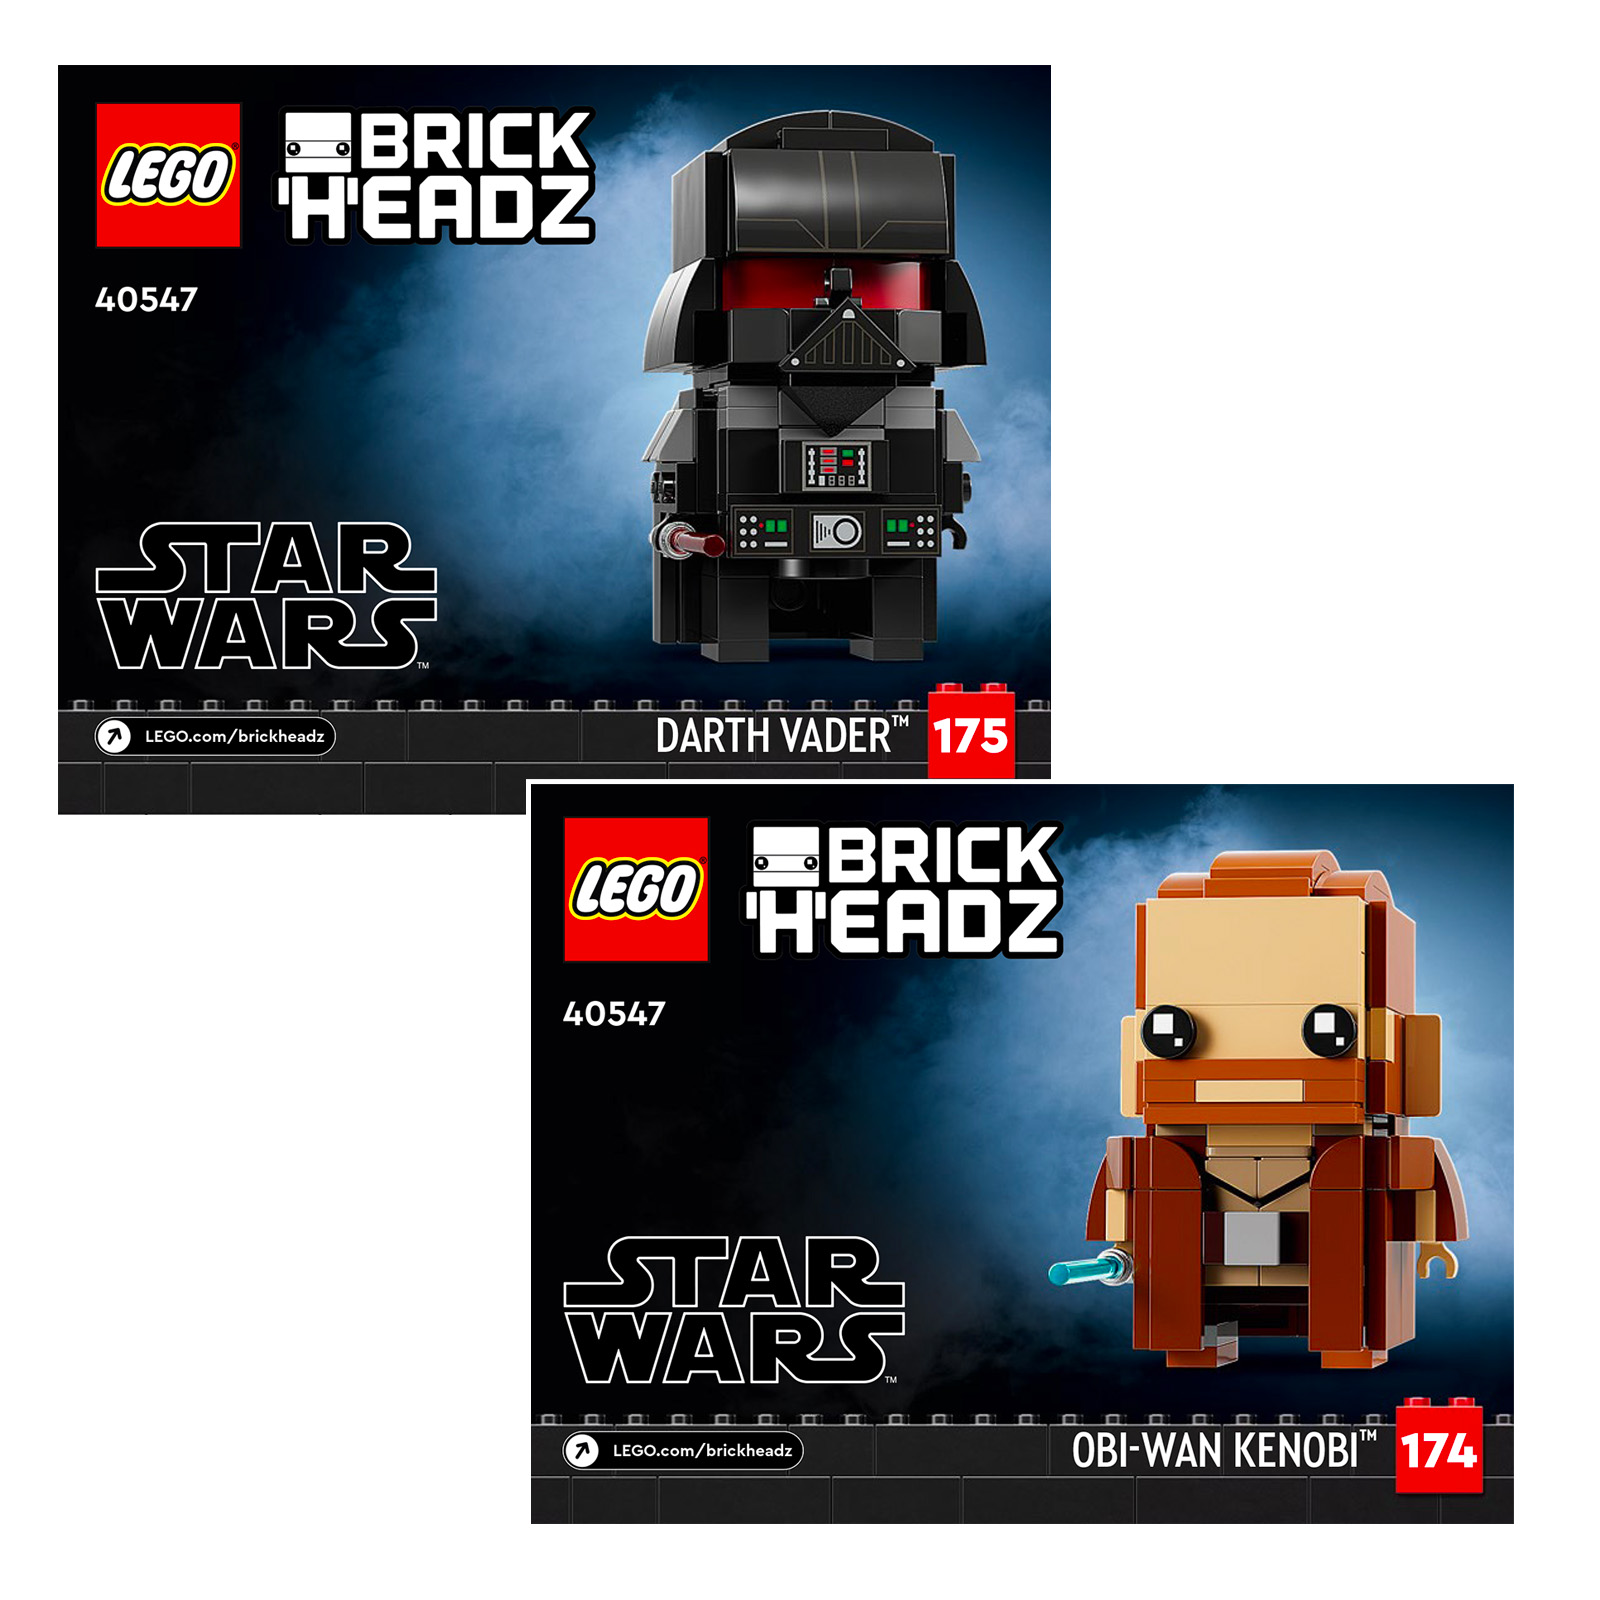 LEGO Star Wars BrickHeadz 40547 Obi-Wan Kenobi & Darth Vader: Eerste beeldmateriaal